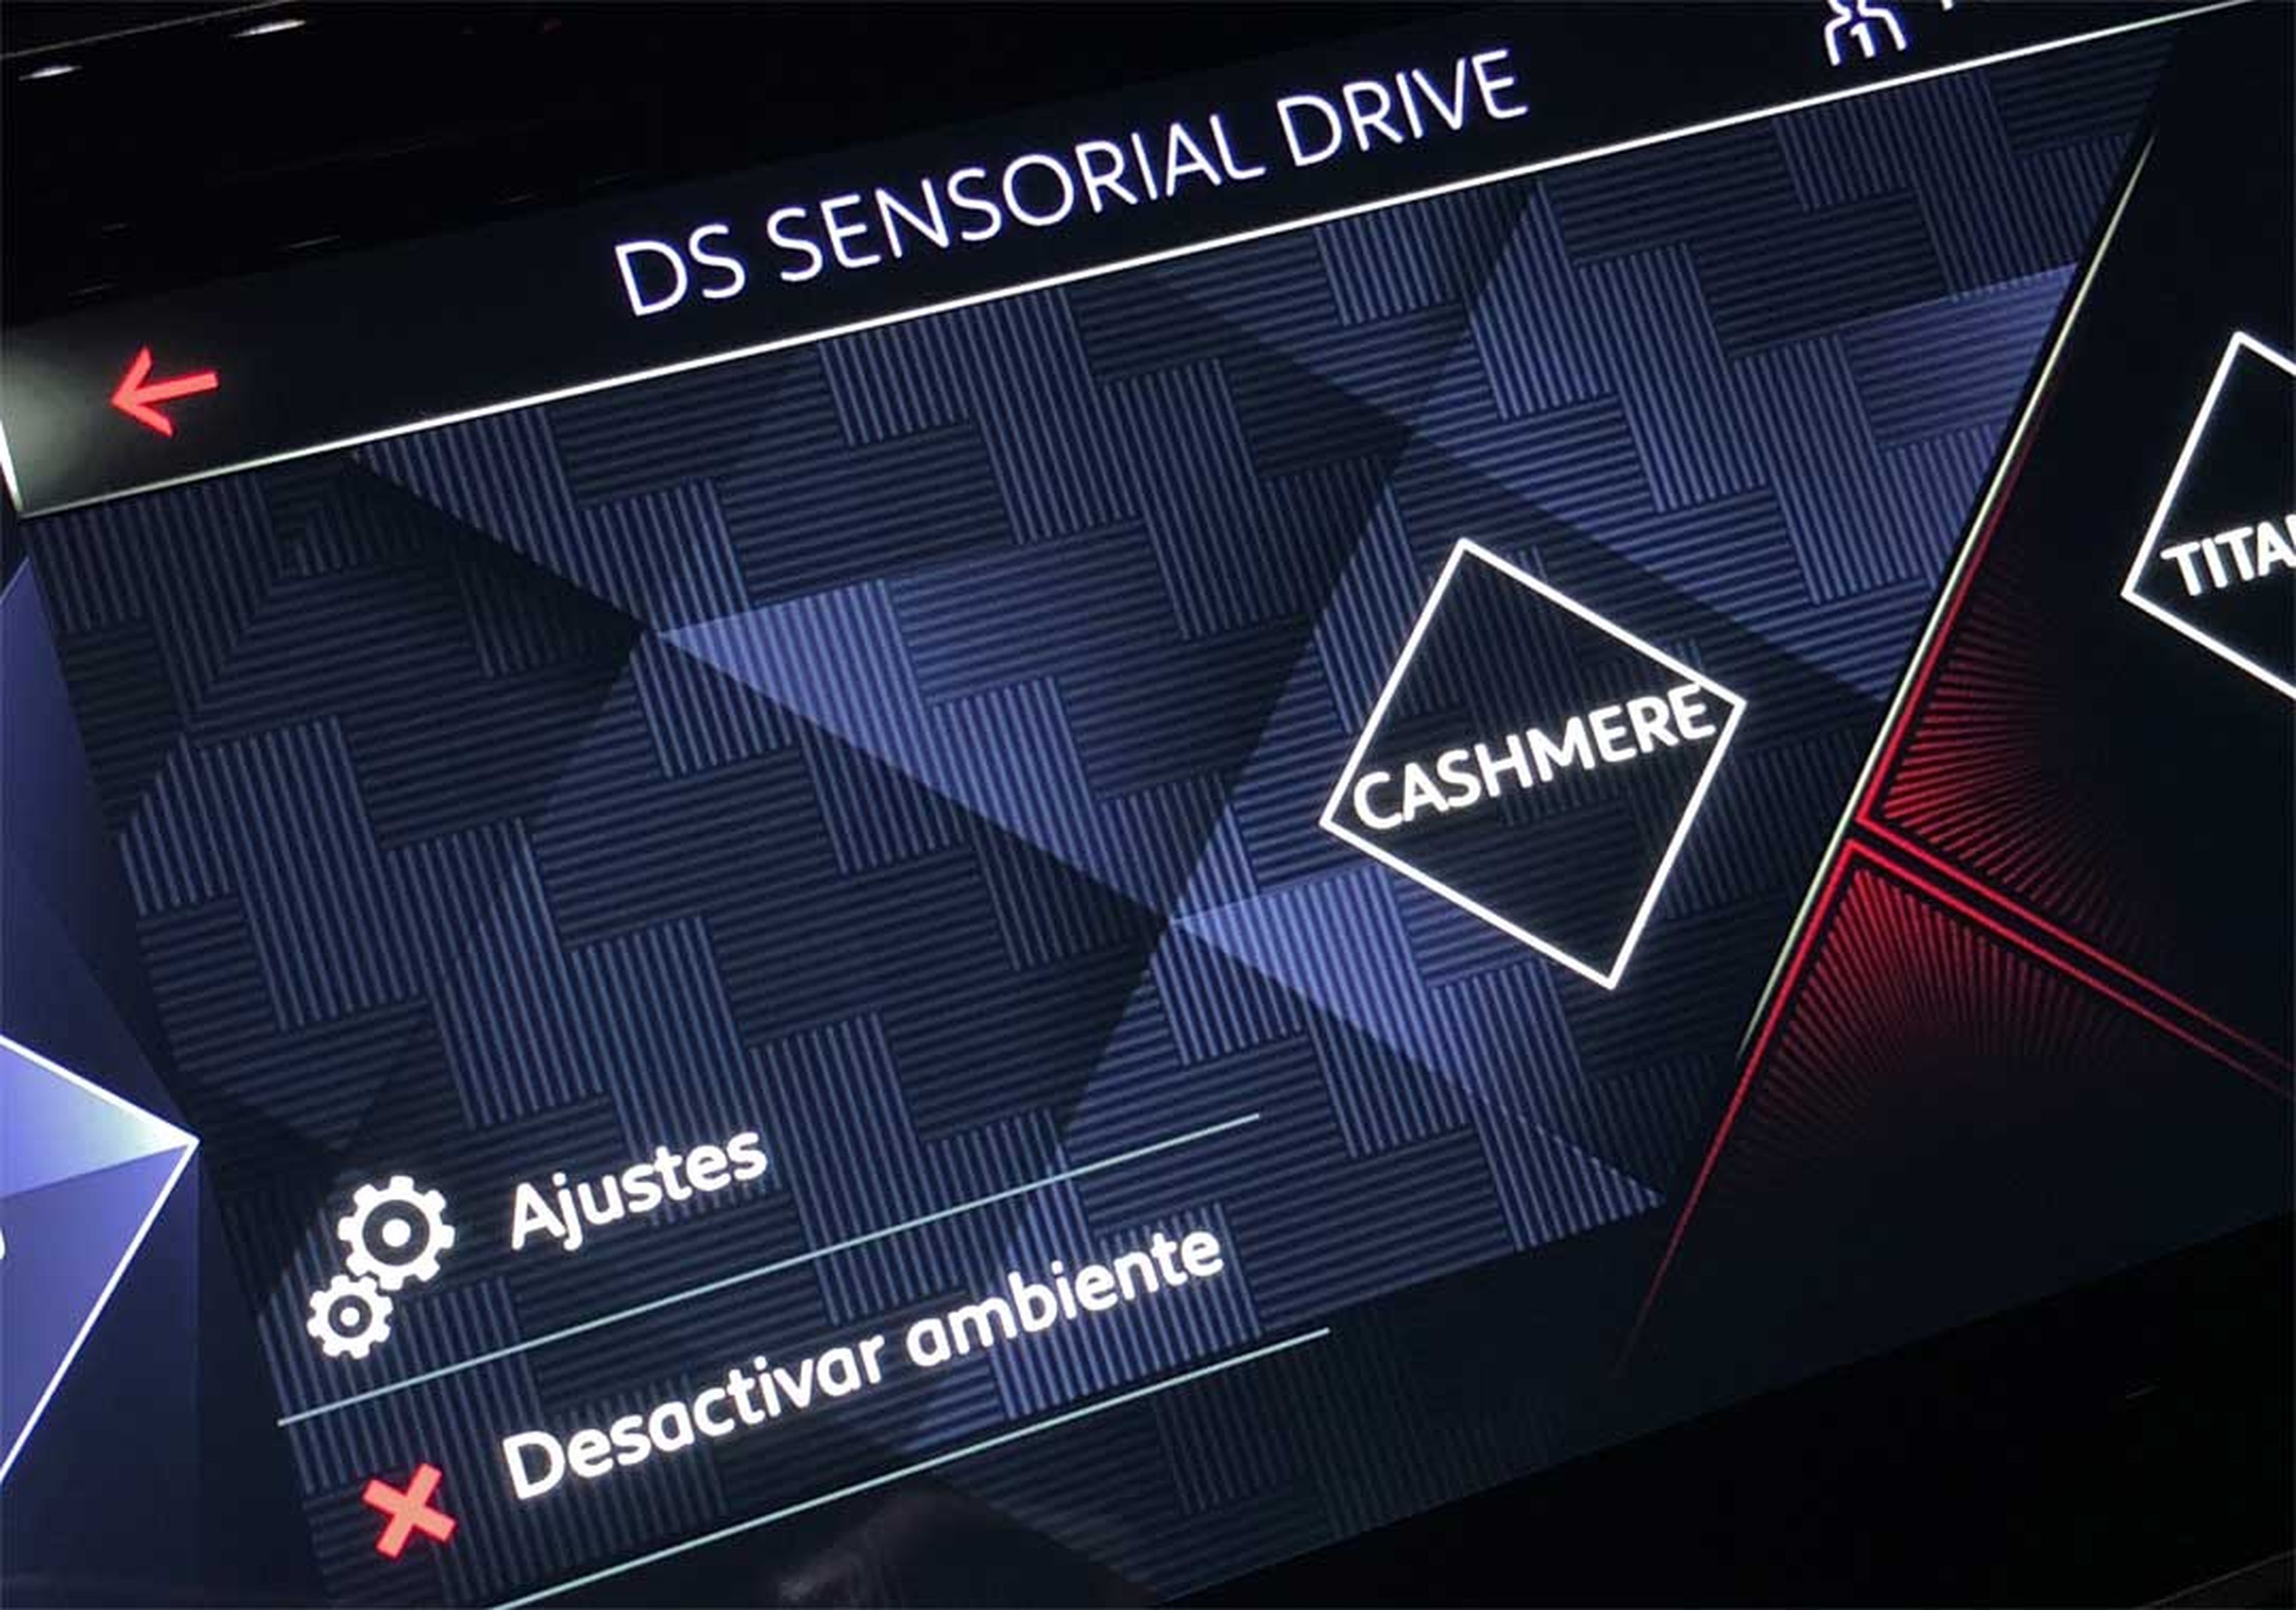 DS Sensorial Drive